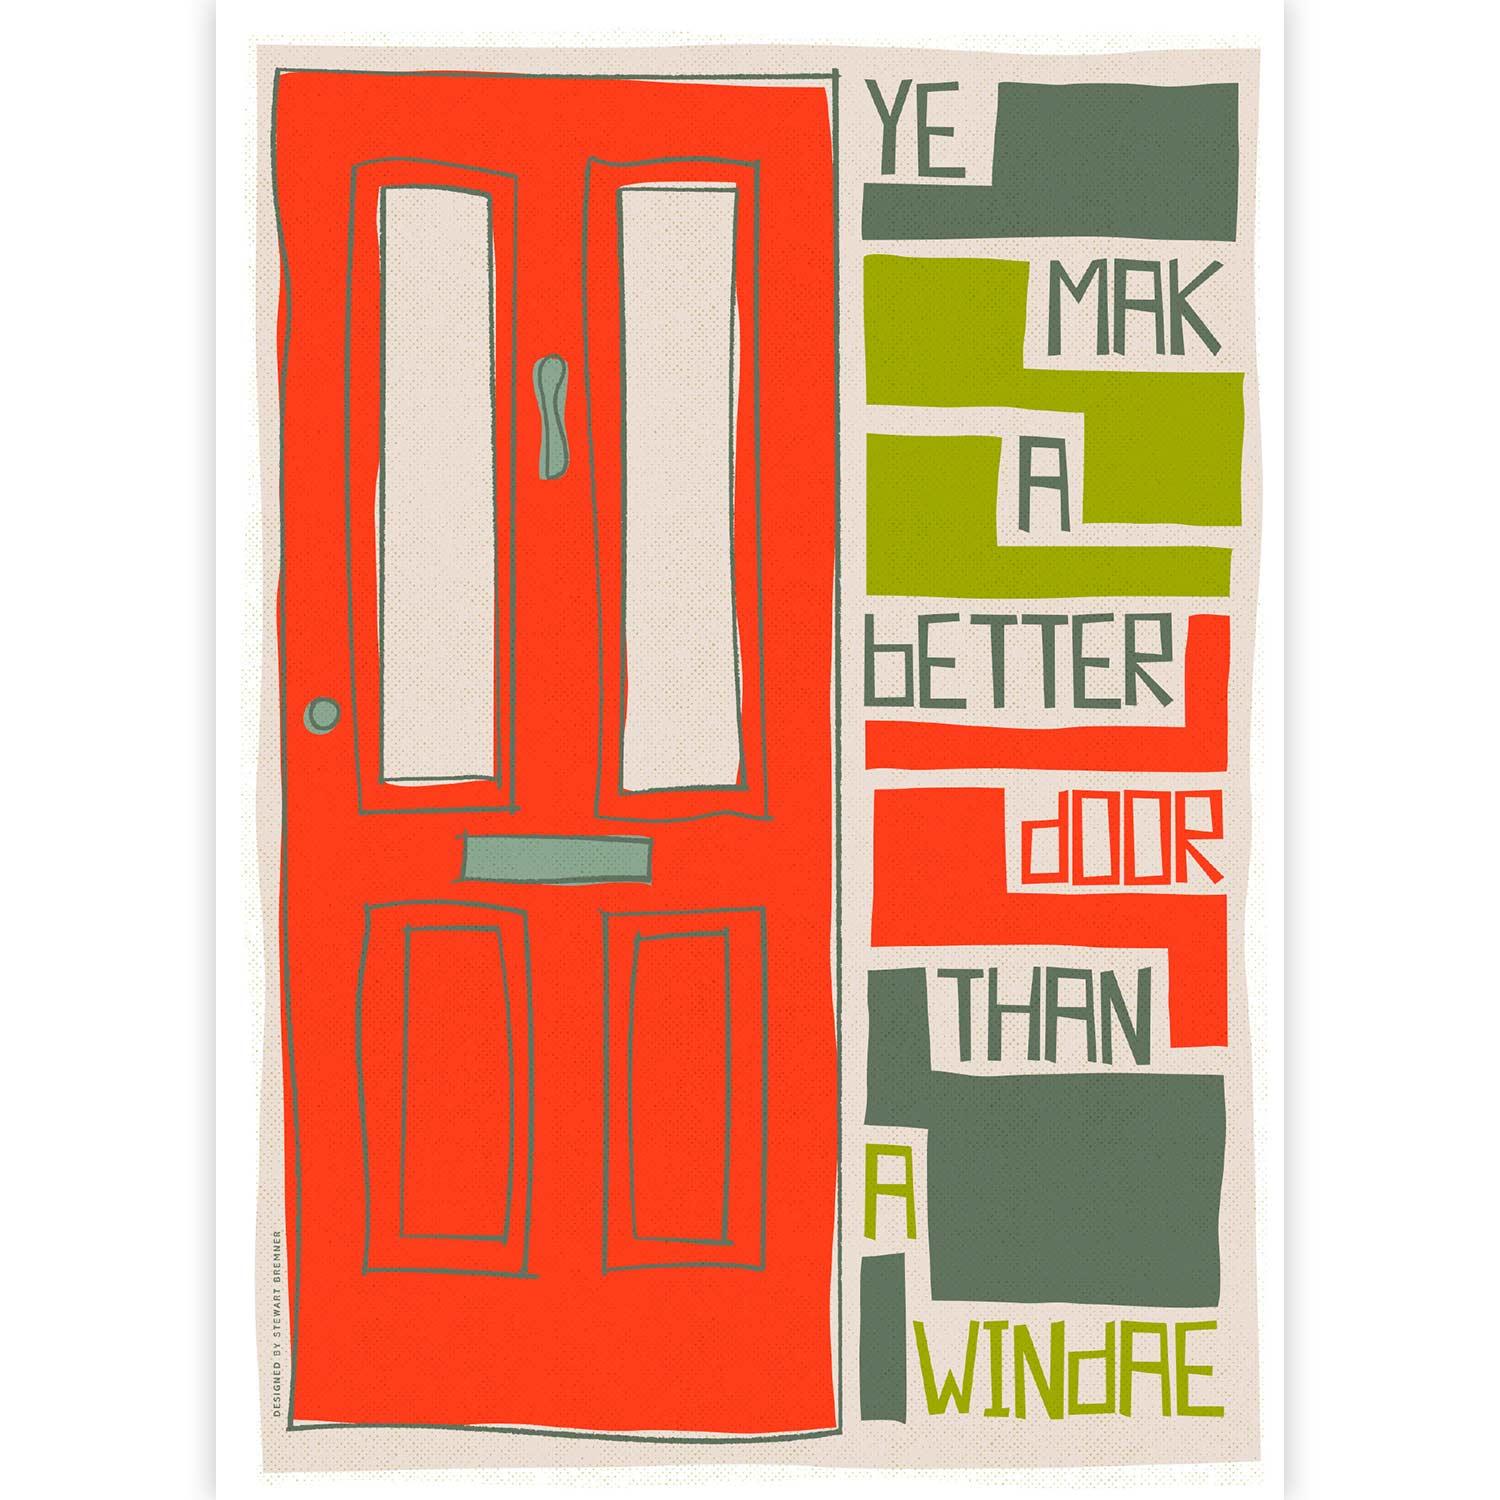 Ye mak a better door than a windae by Stewart Bremner